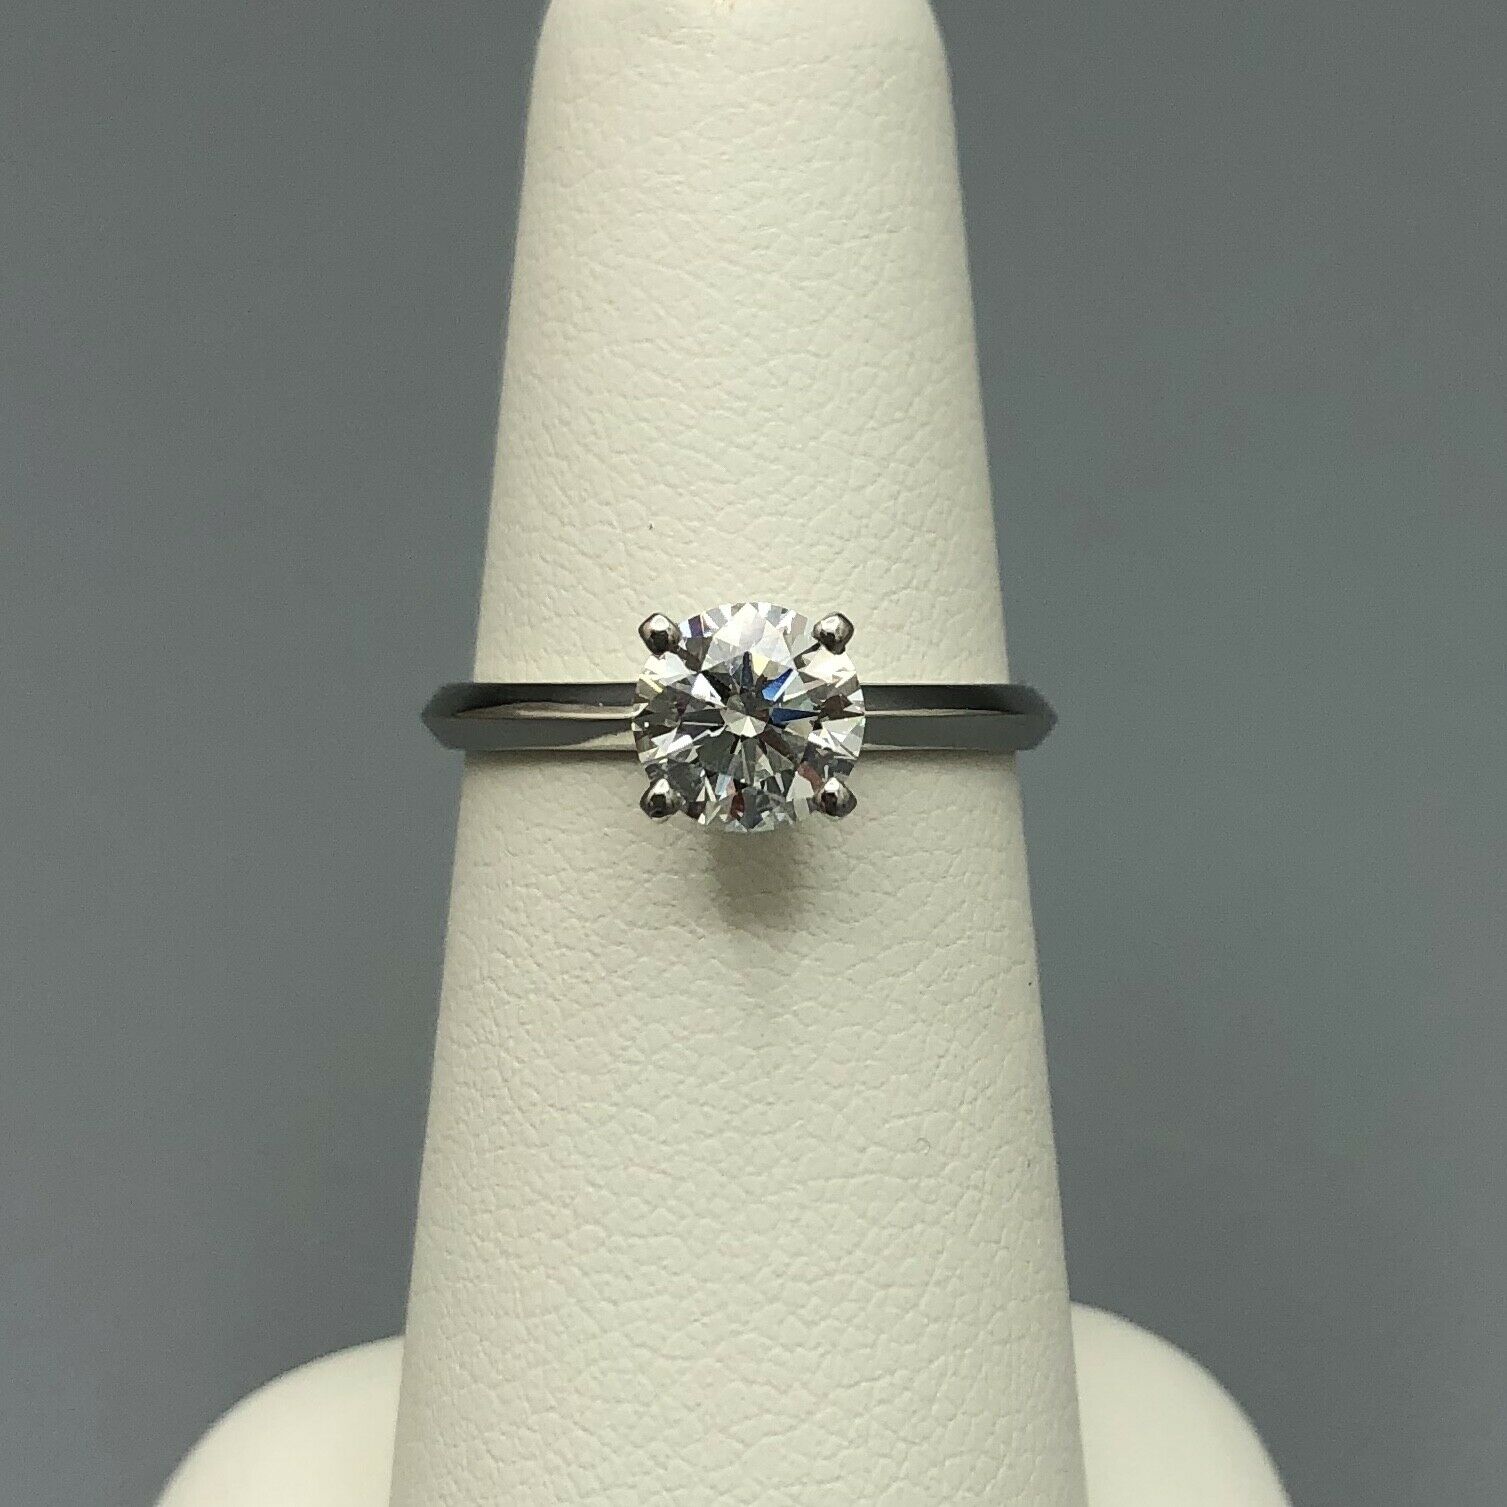 GIA Certified Platinum Diamond Engament Ring - 0.85 carat VVS2 G Color